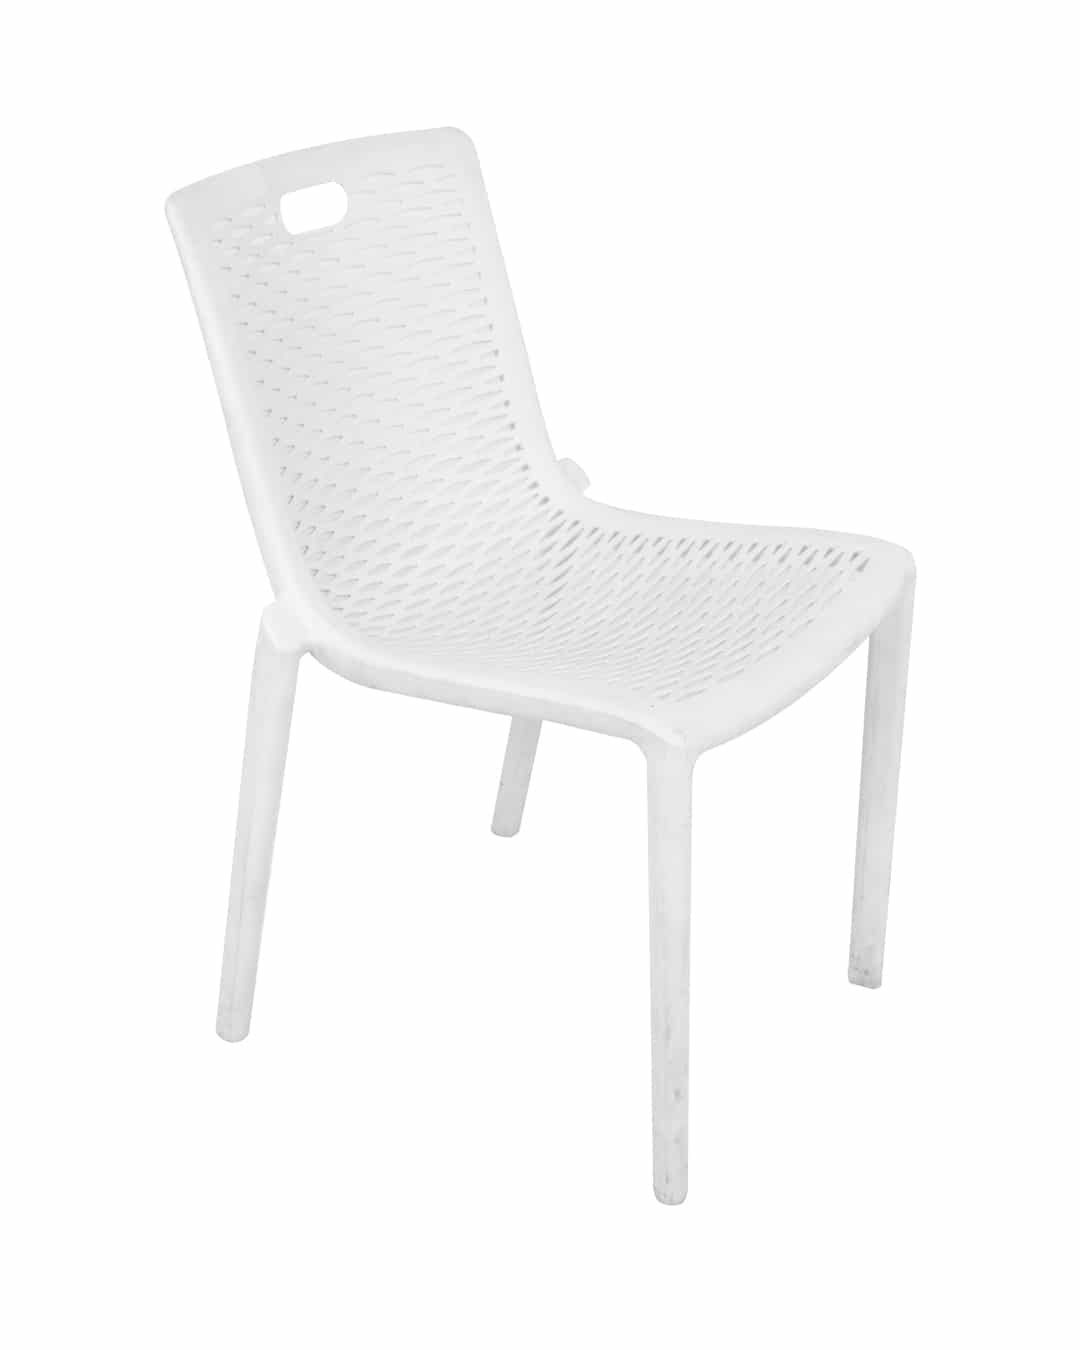 Safeer Magic Chair - Dining Chair - Plastic Leg